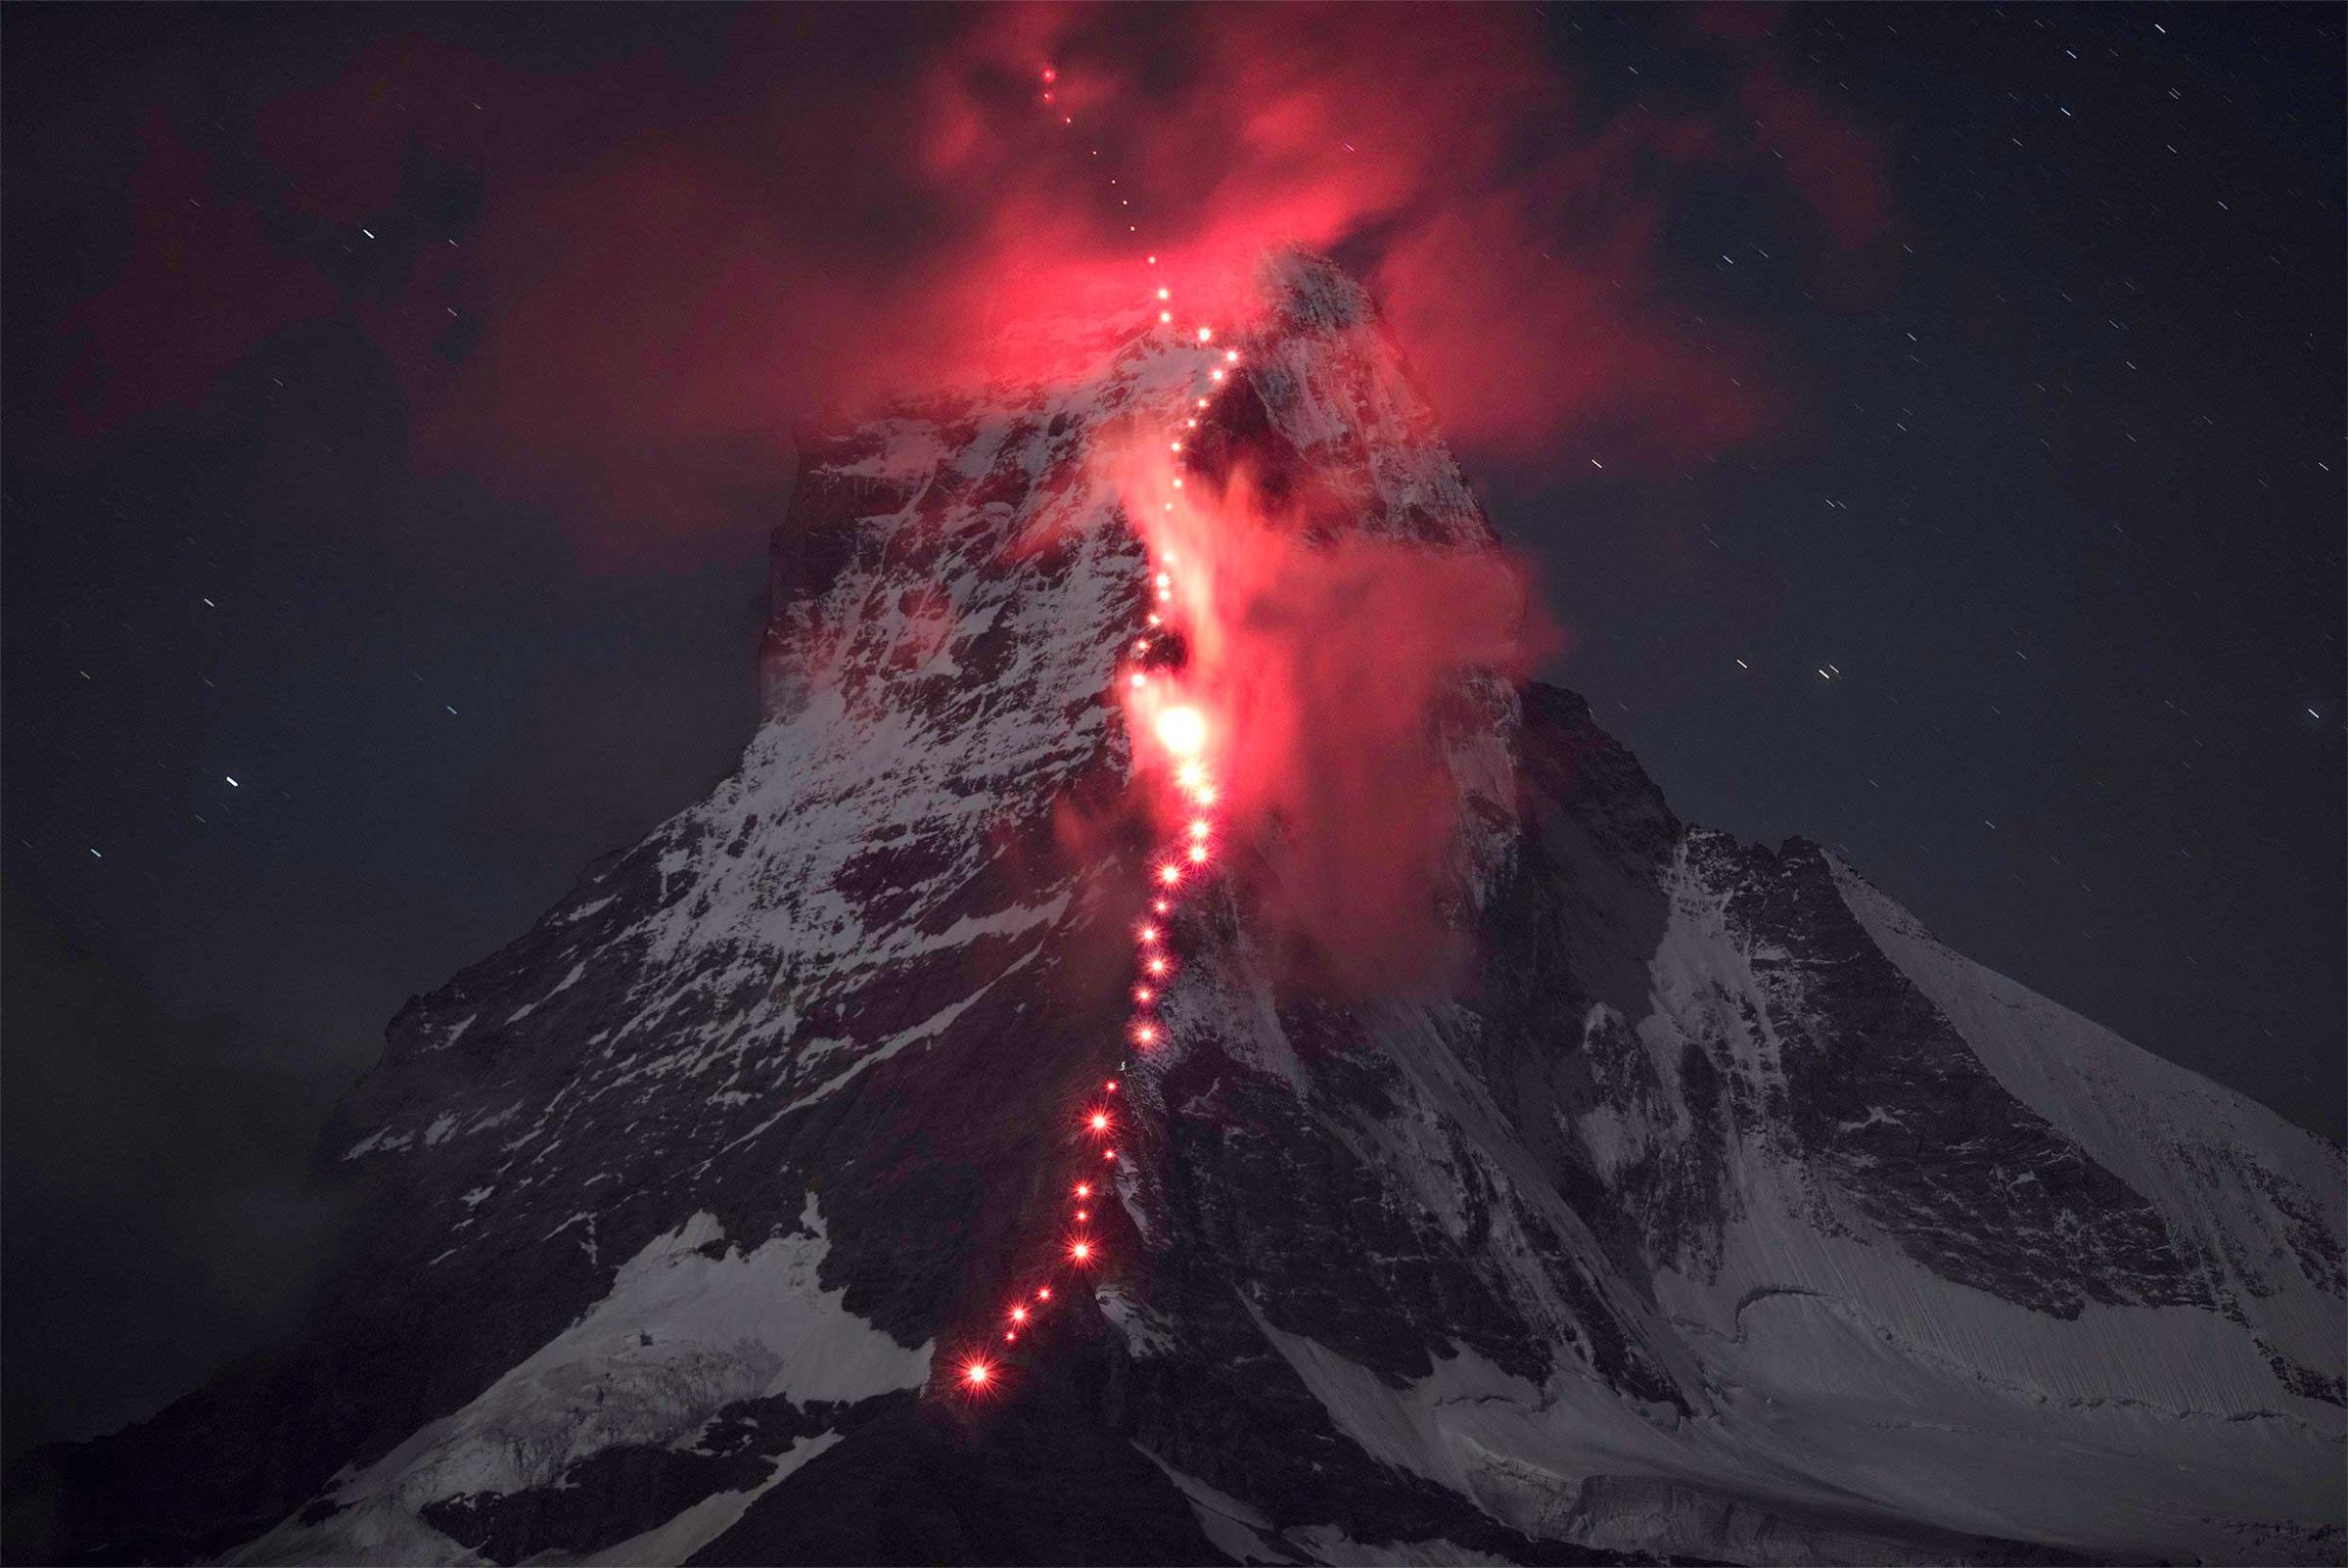 Matterhorn Illuminated to celebrate 150th Ascent Anniversary